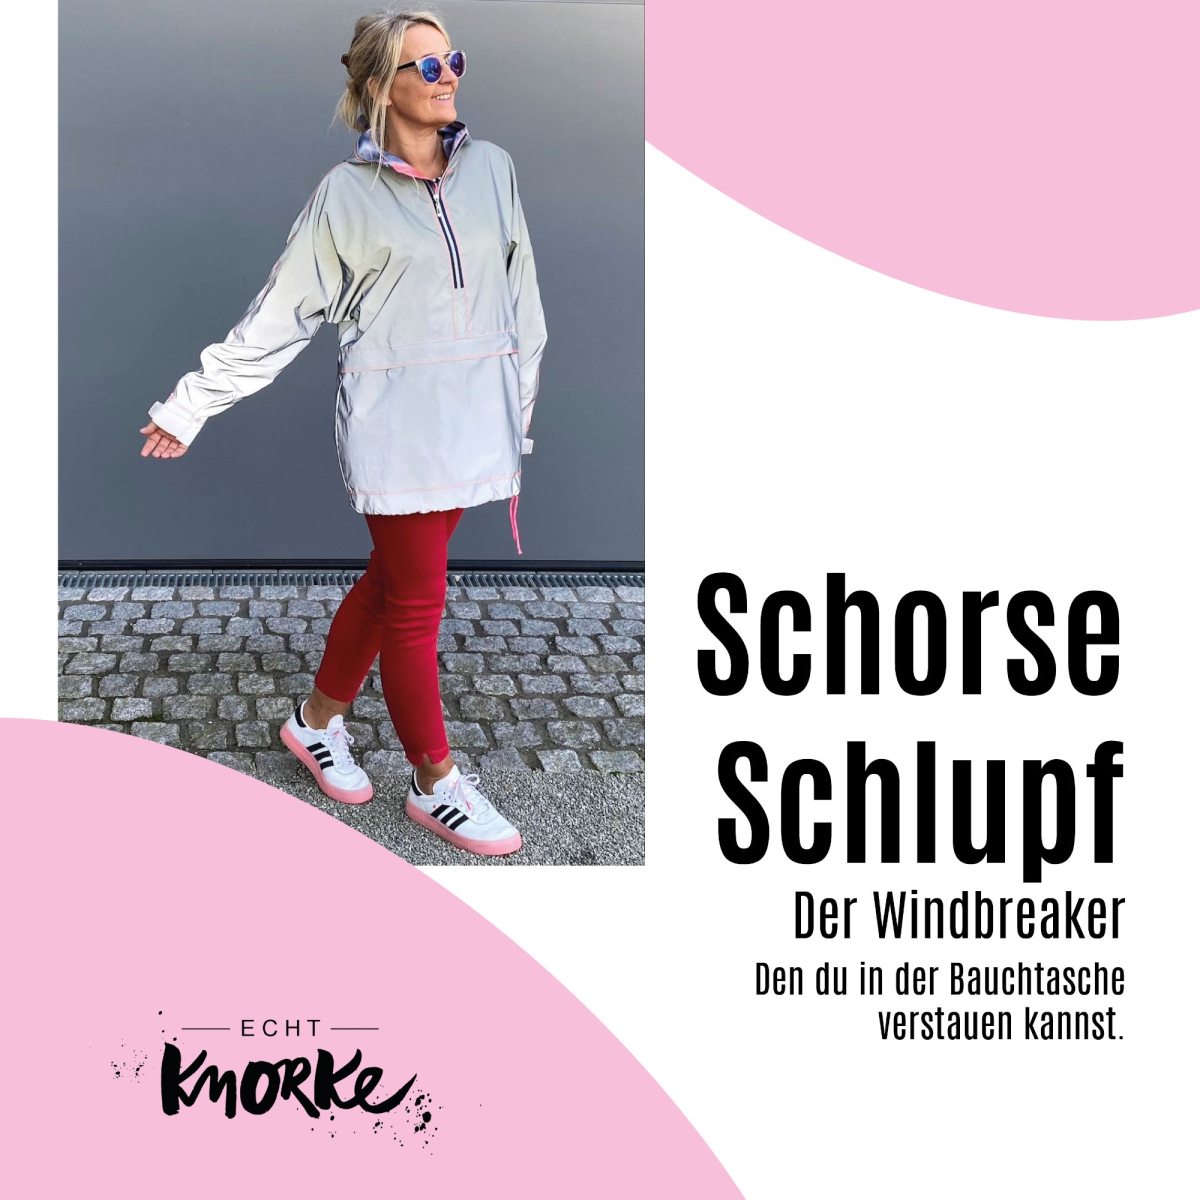 E-Book Echt Knorke Schorse Schlupf Windbreaker, en allemand